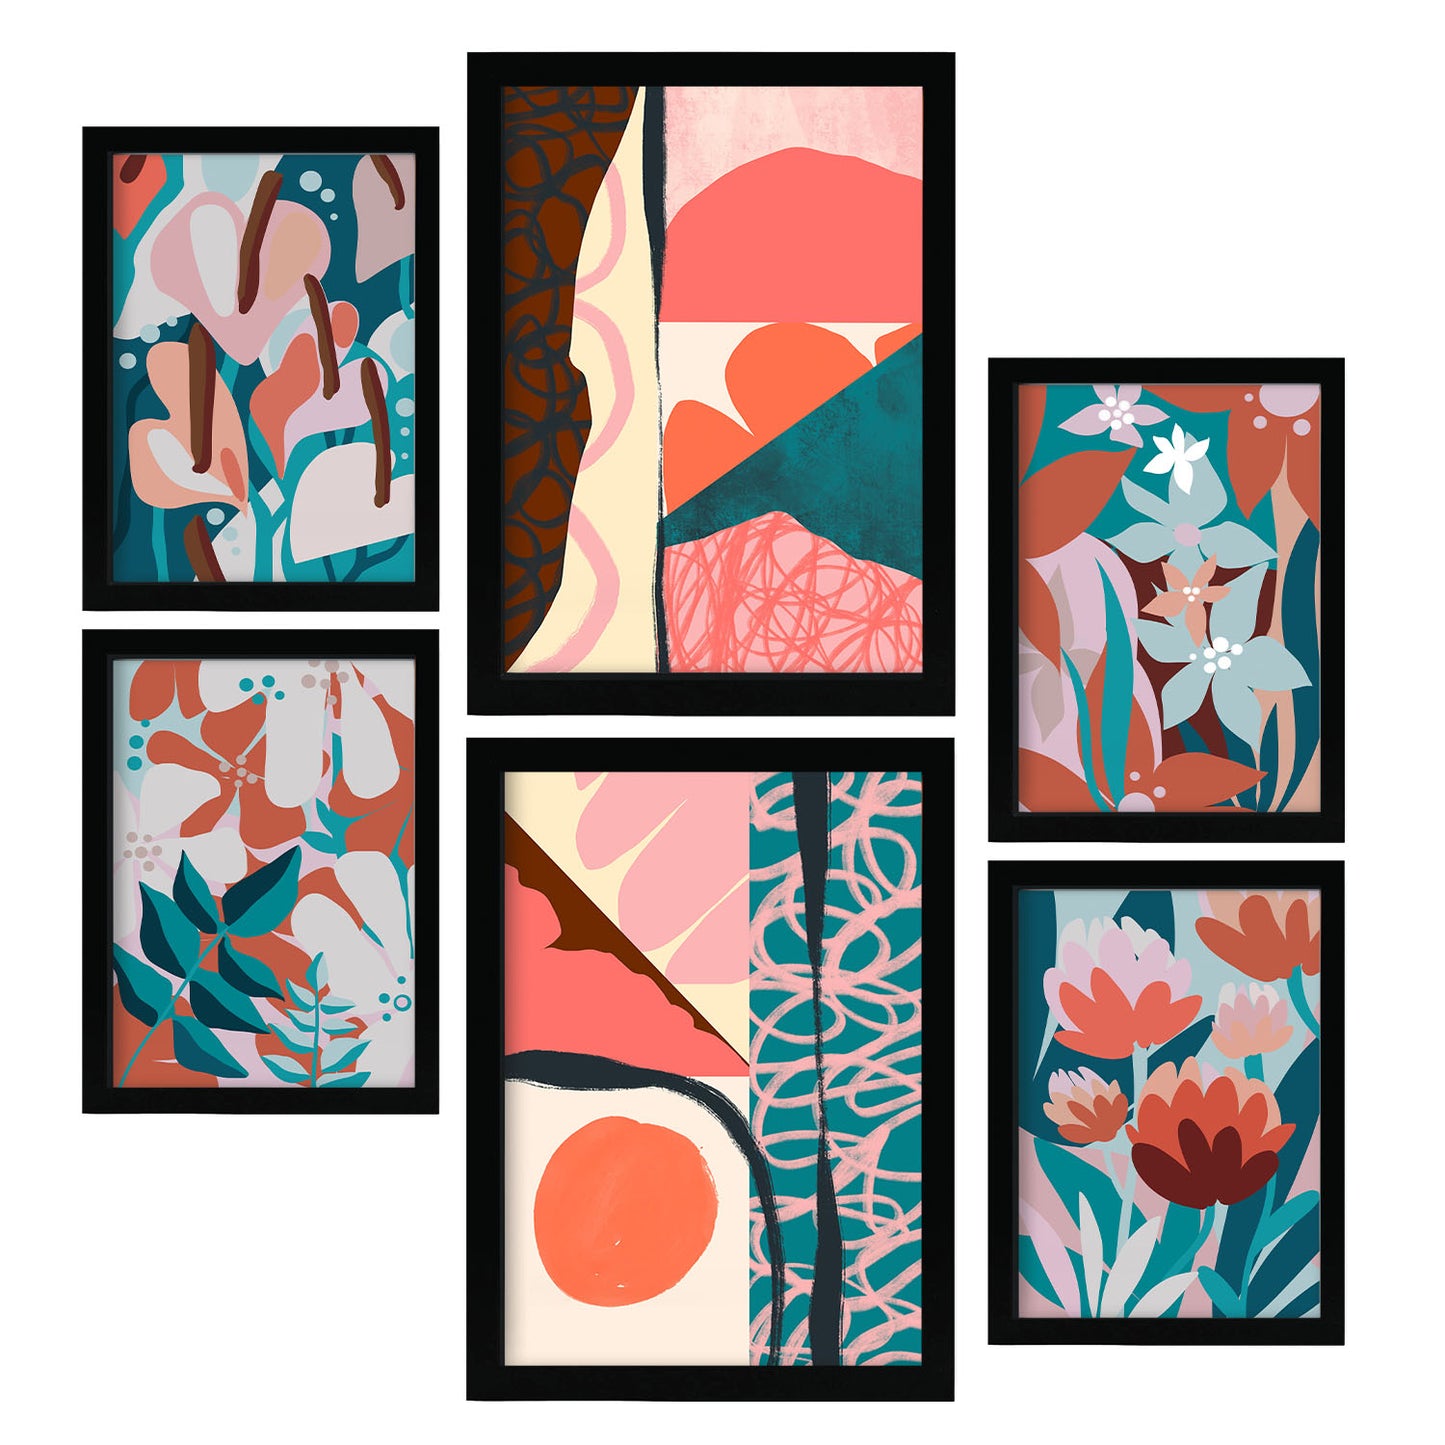 Conjunto Nacnic de 6 Láminas Abstractas de Flores